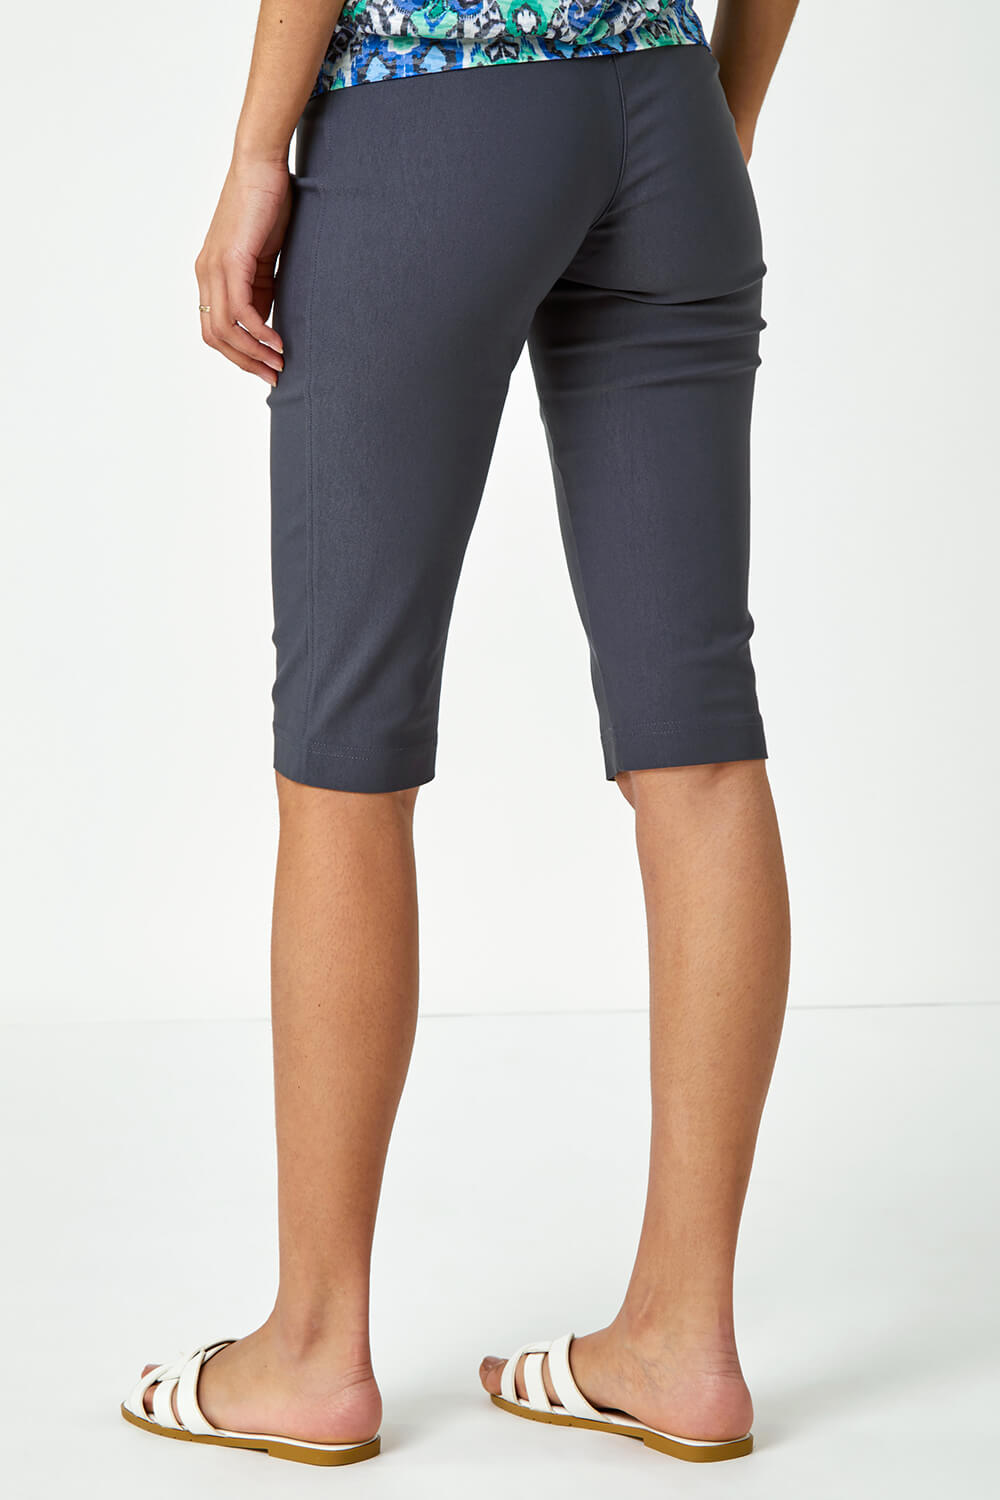 Dark Grey Knee Length Stretch Shorts, Image 3 of 5